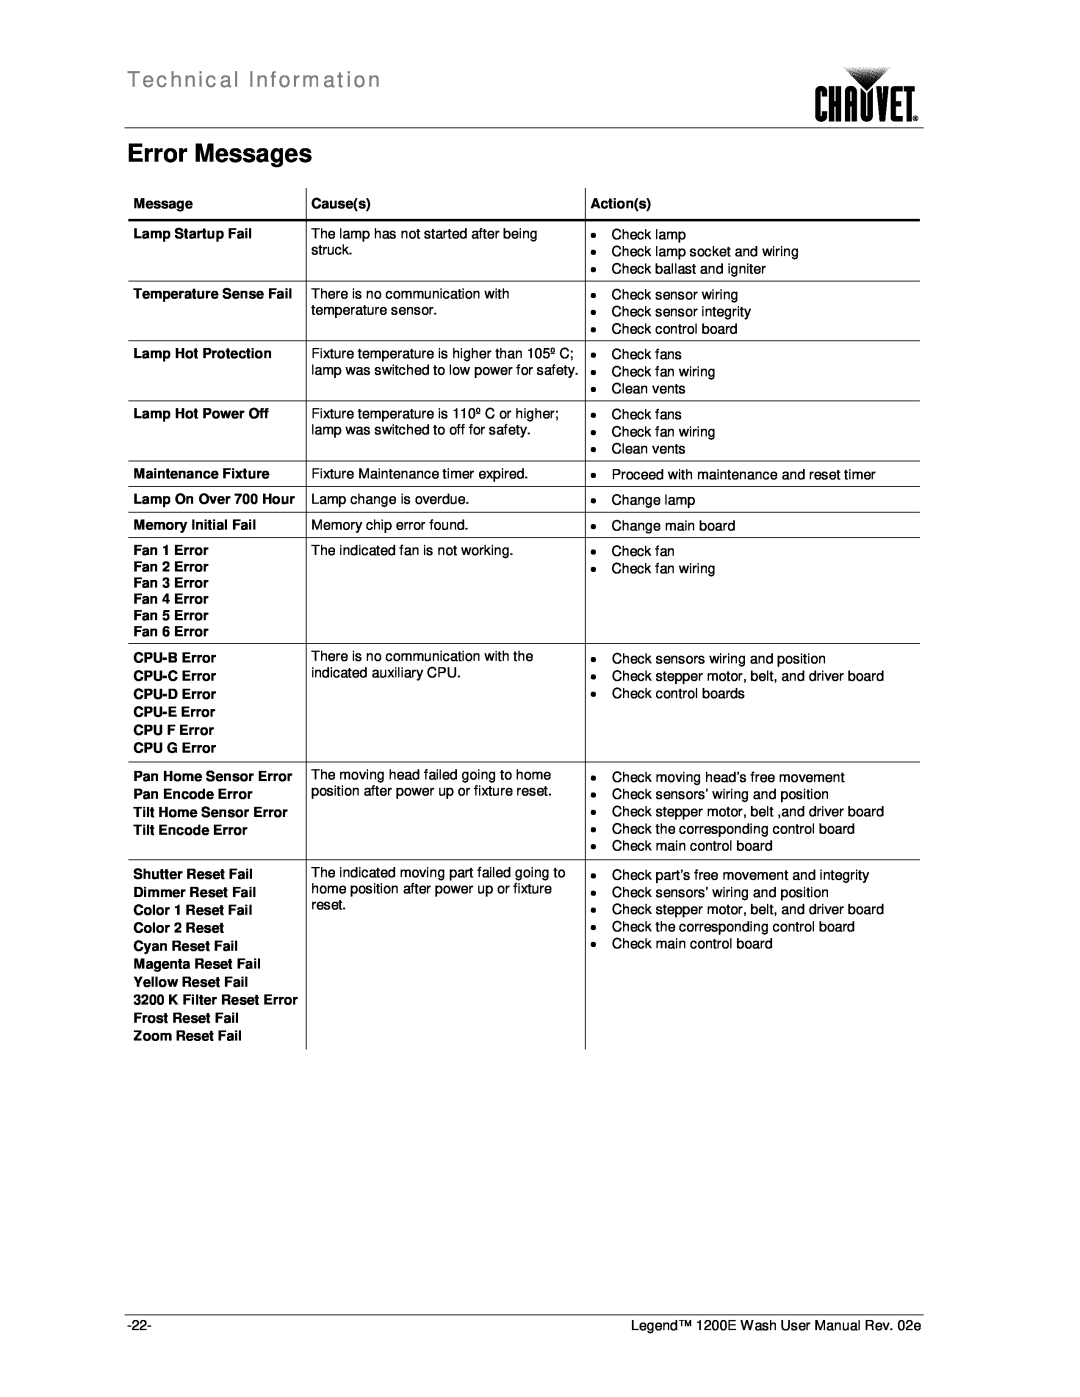 Chauvet 1200E user manual Error Messages, Technical Information 